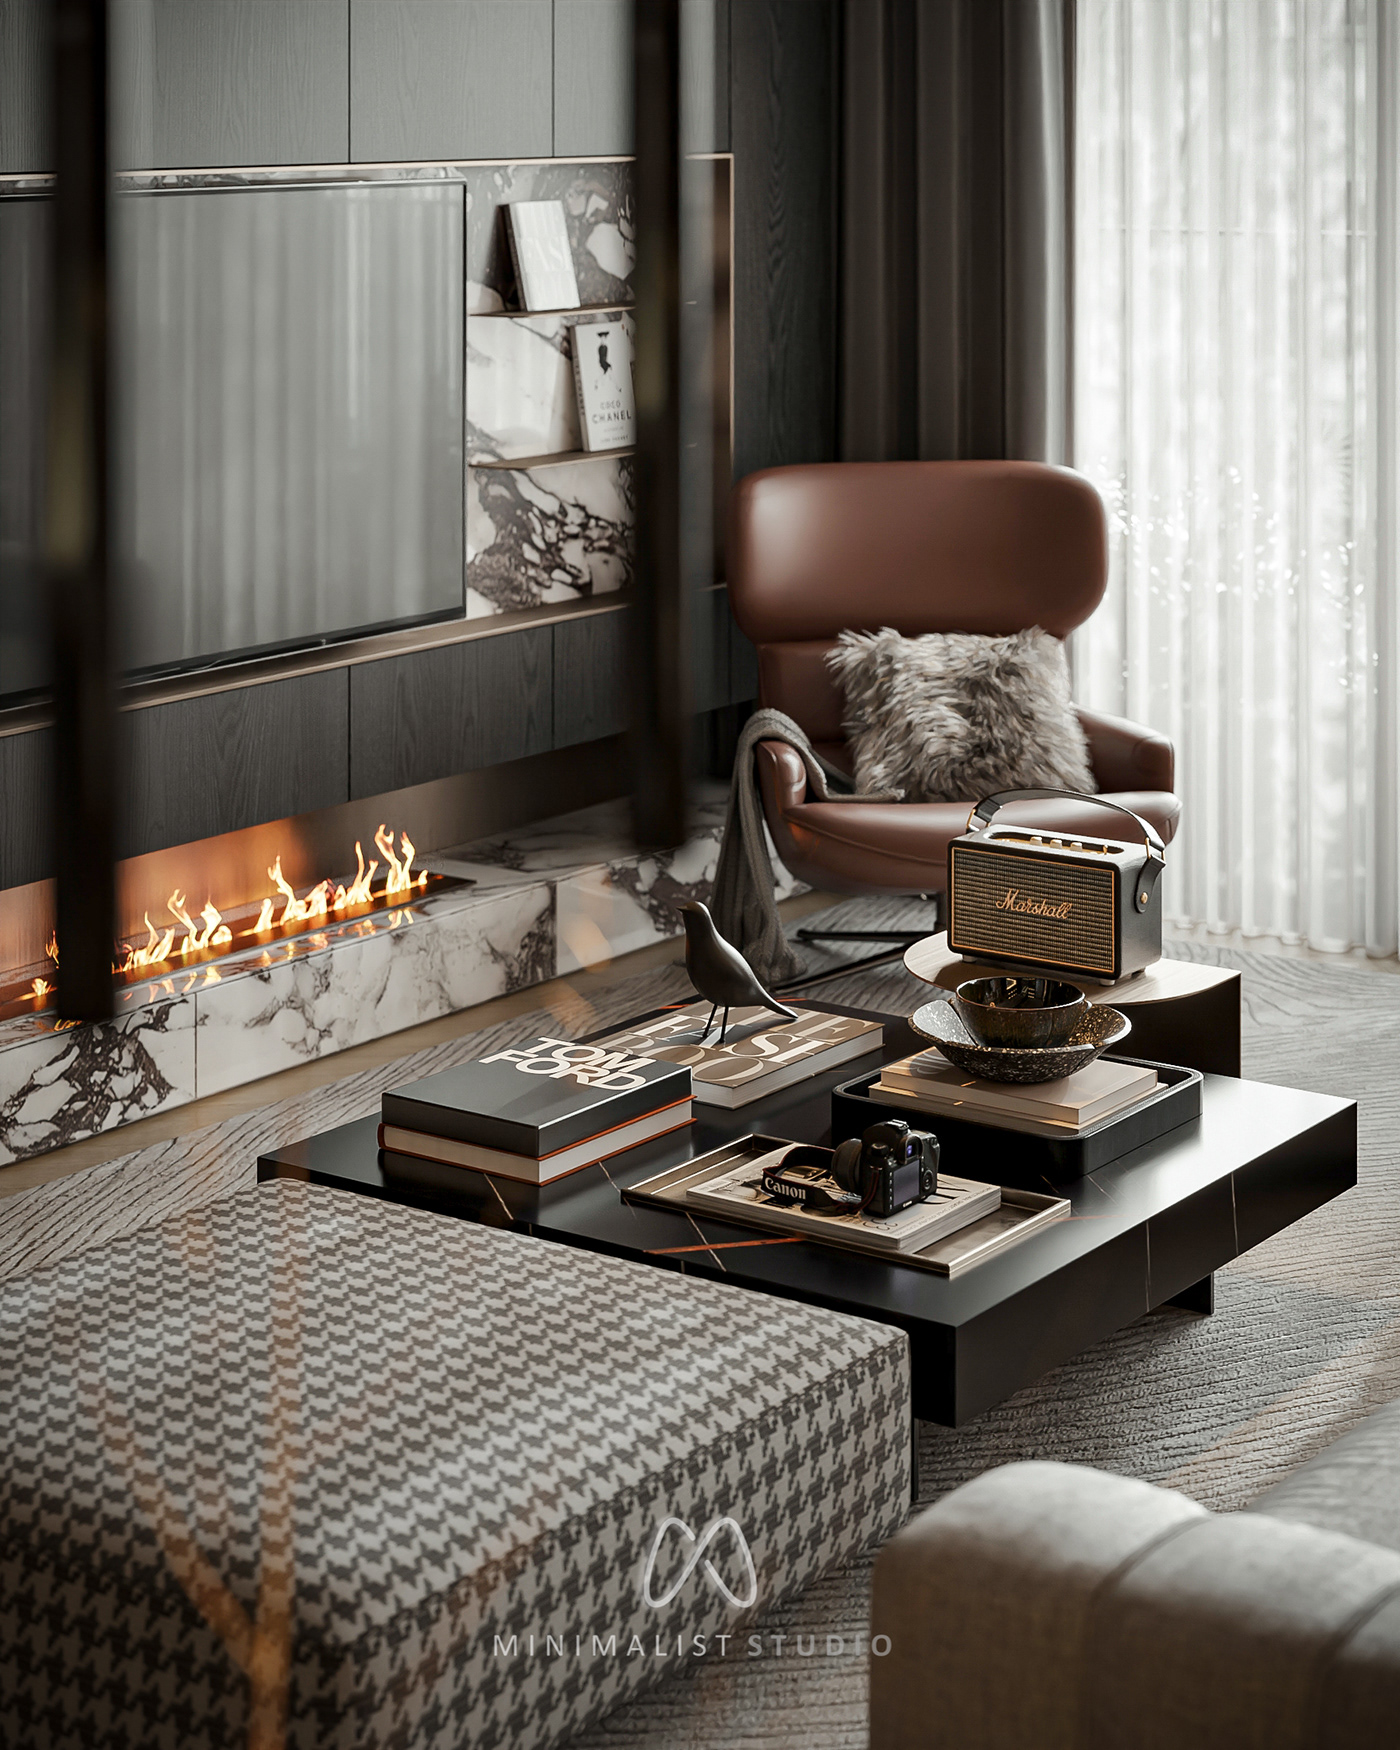 architecture living room kitchen Interior Render visualization minimalist studio